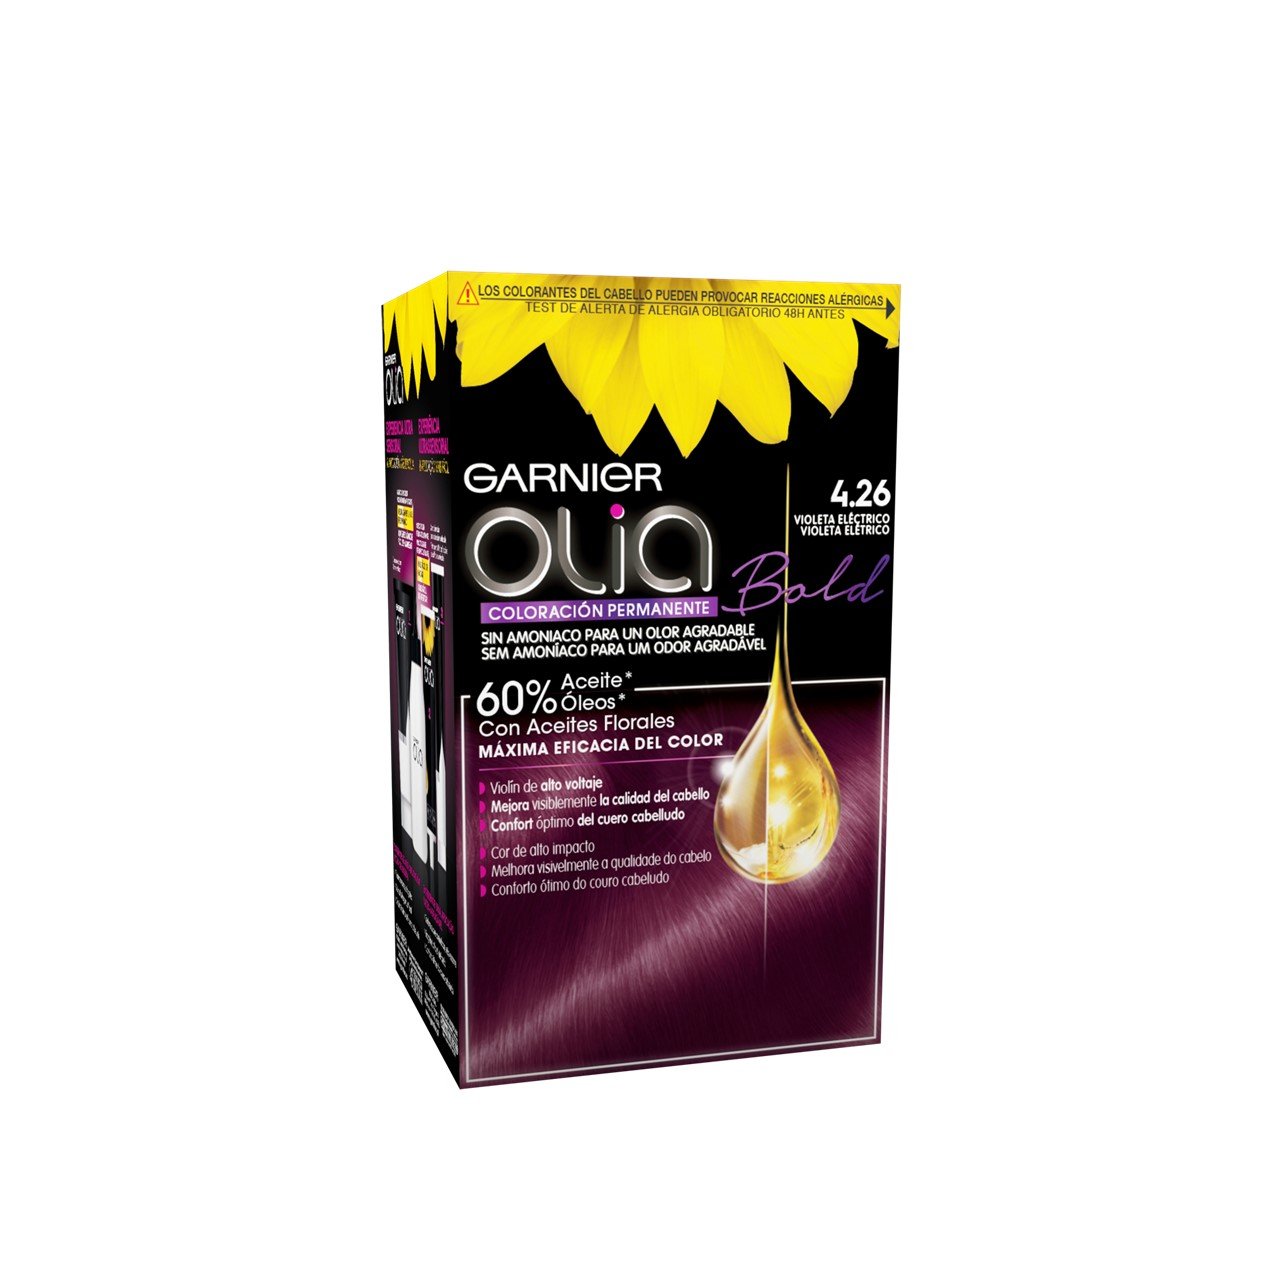 Garnier Olia 4.26 Permanent Hair Dye